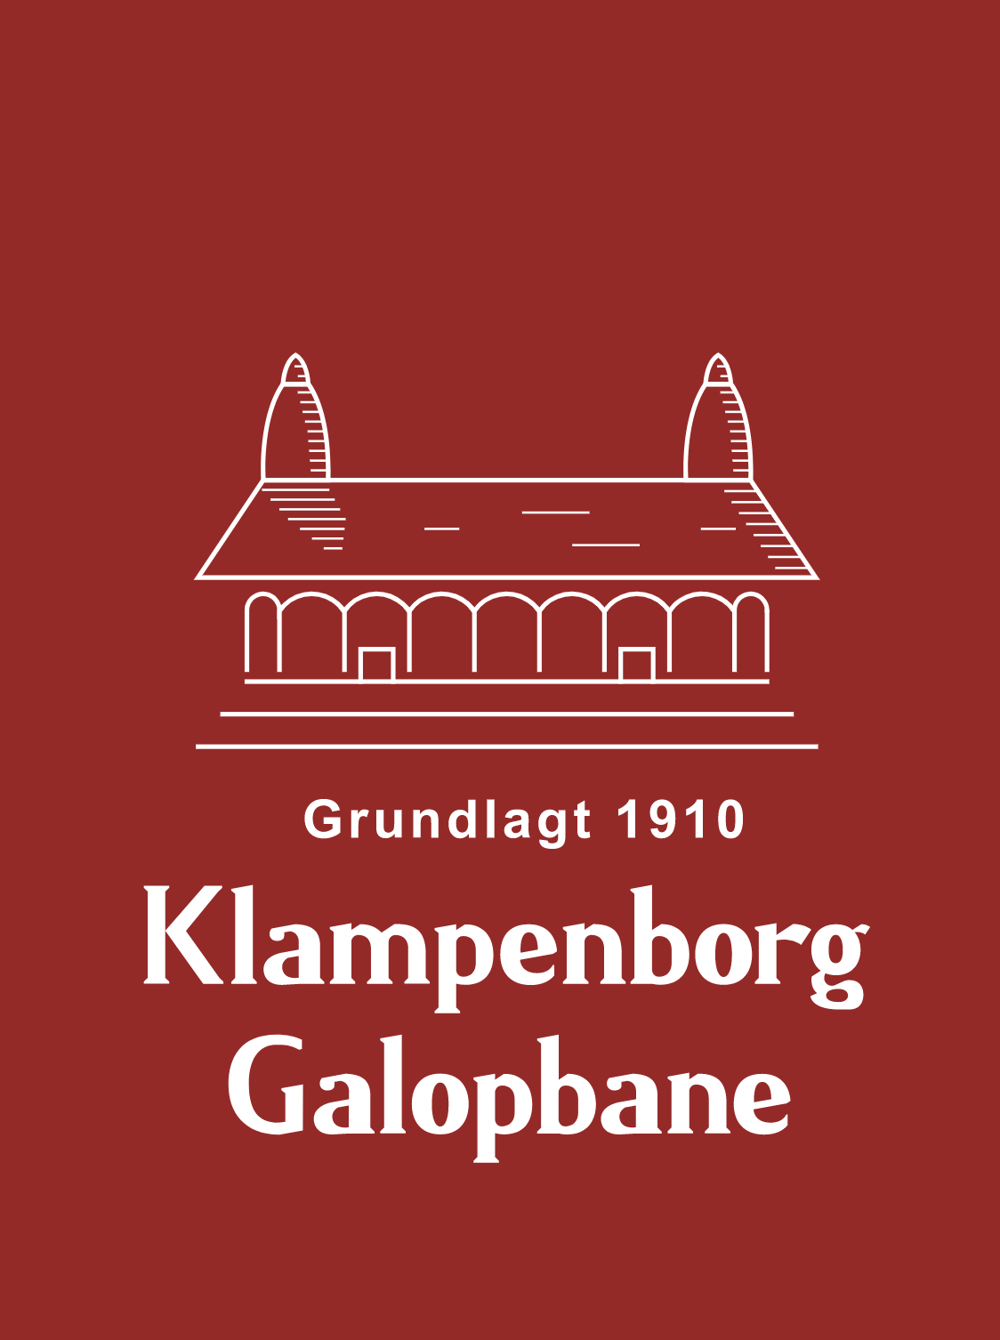 Free Tickets to Klampenborg Galopbane